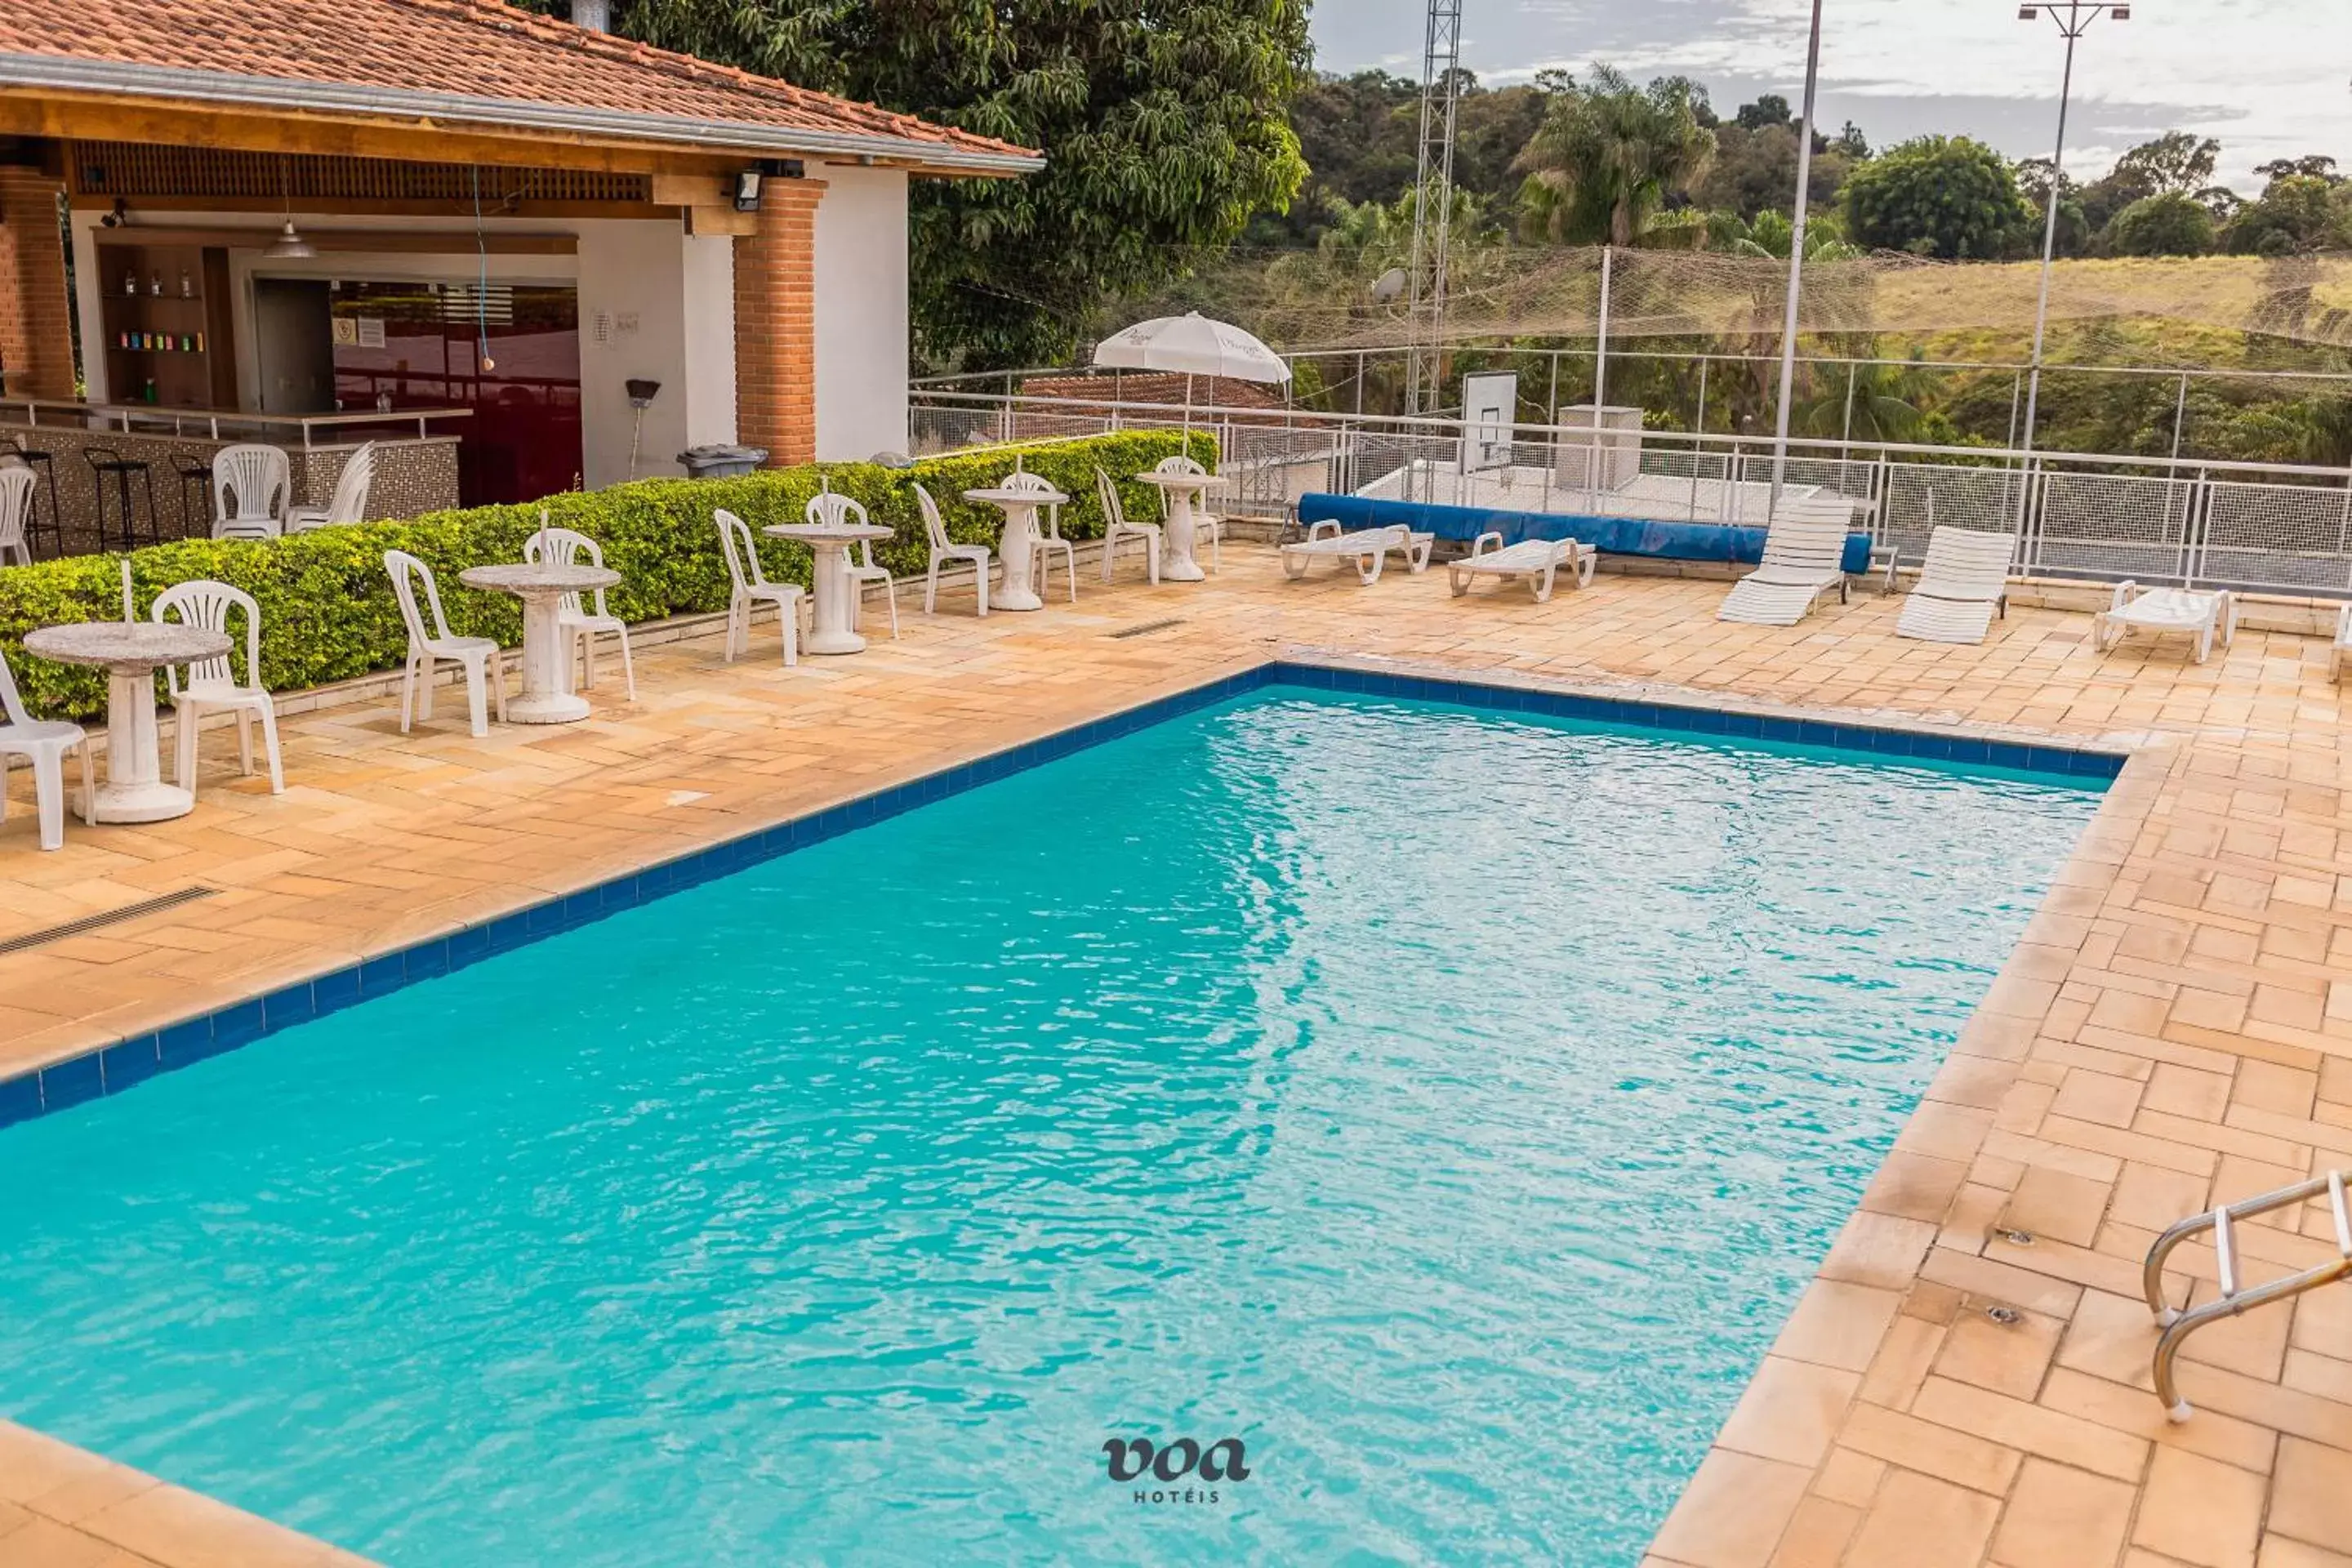 Pool view, Swimming Pool in VOA Plazza Hotel